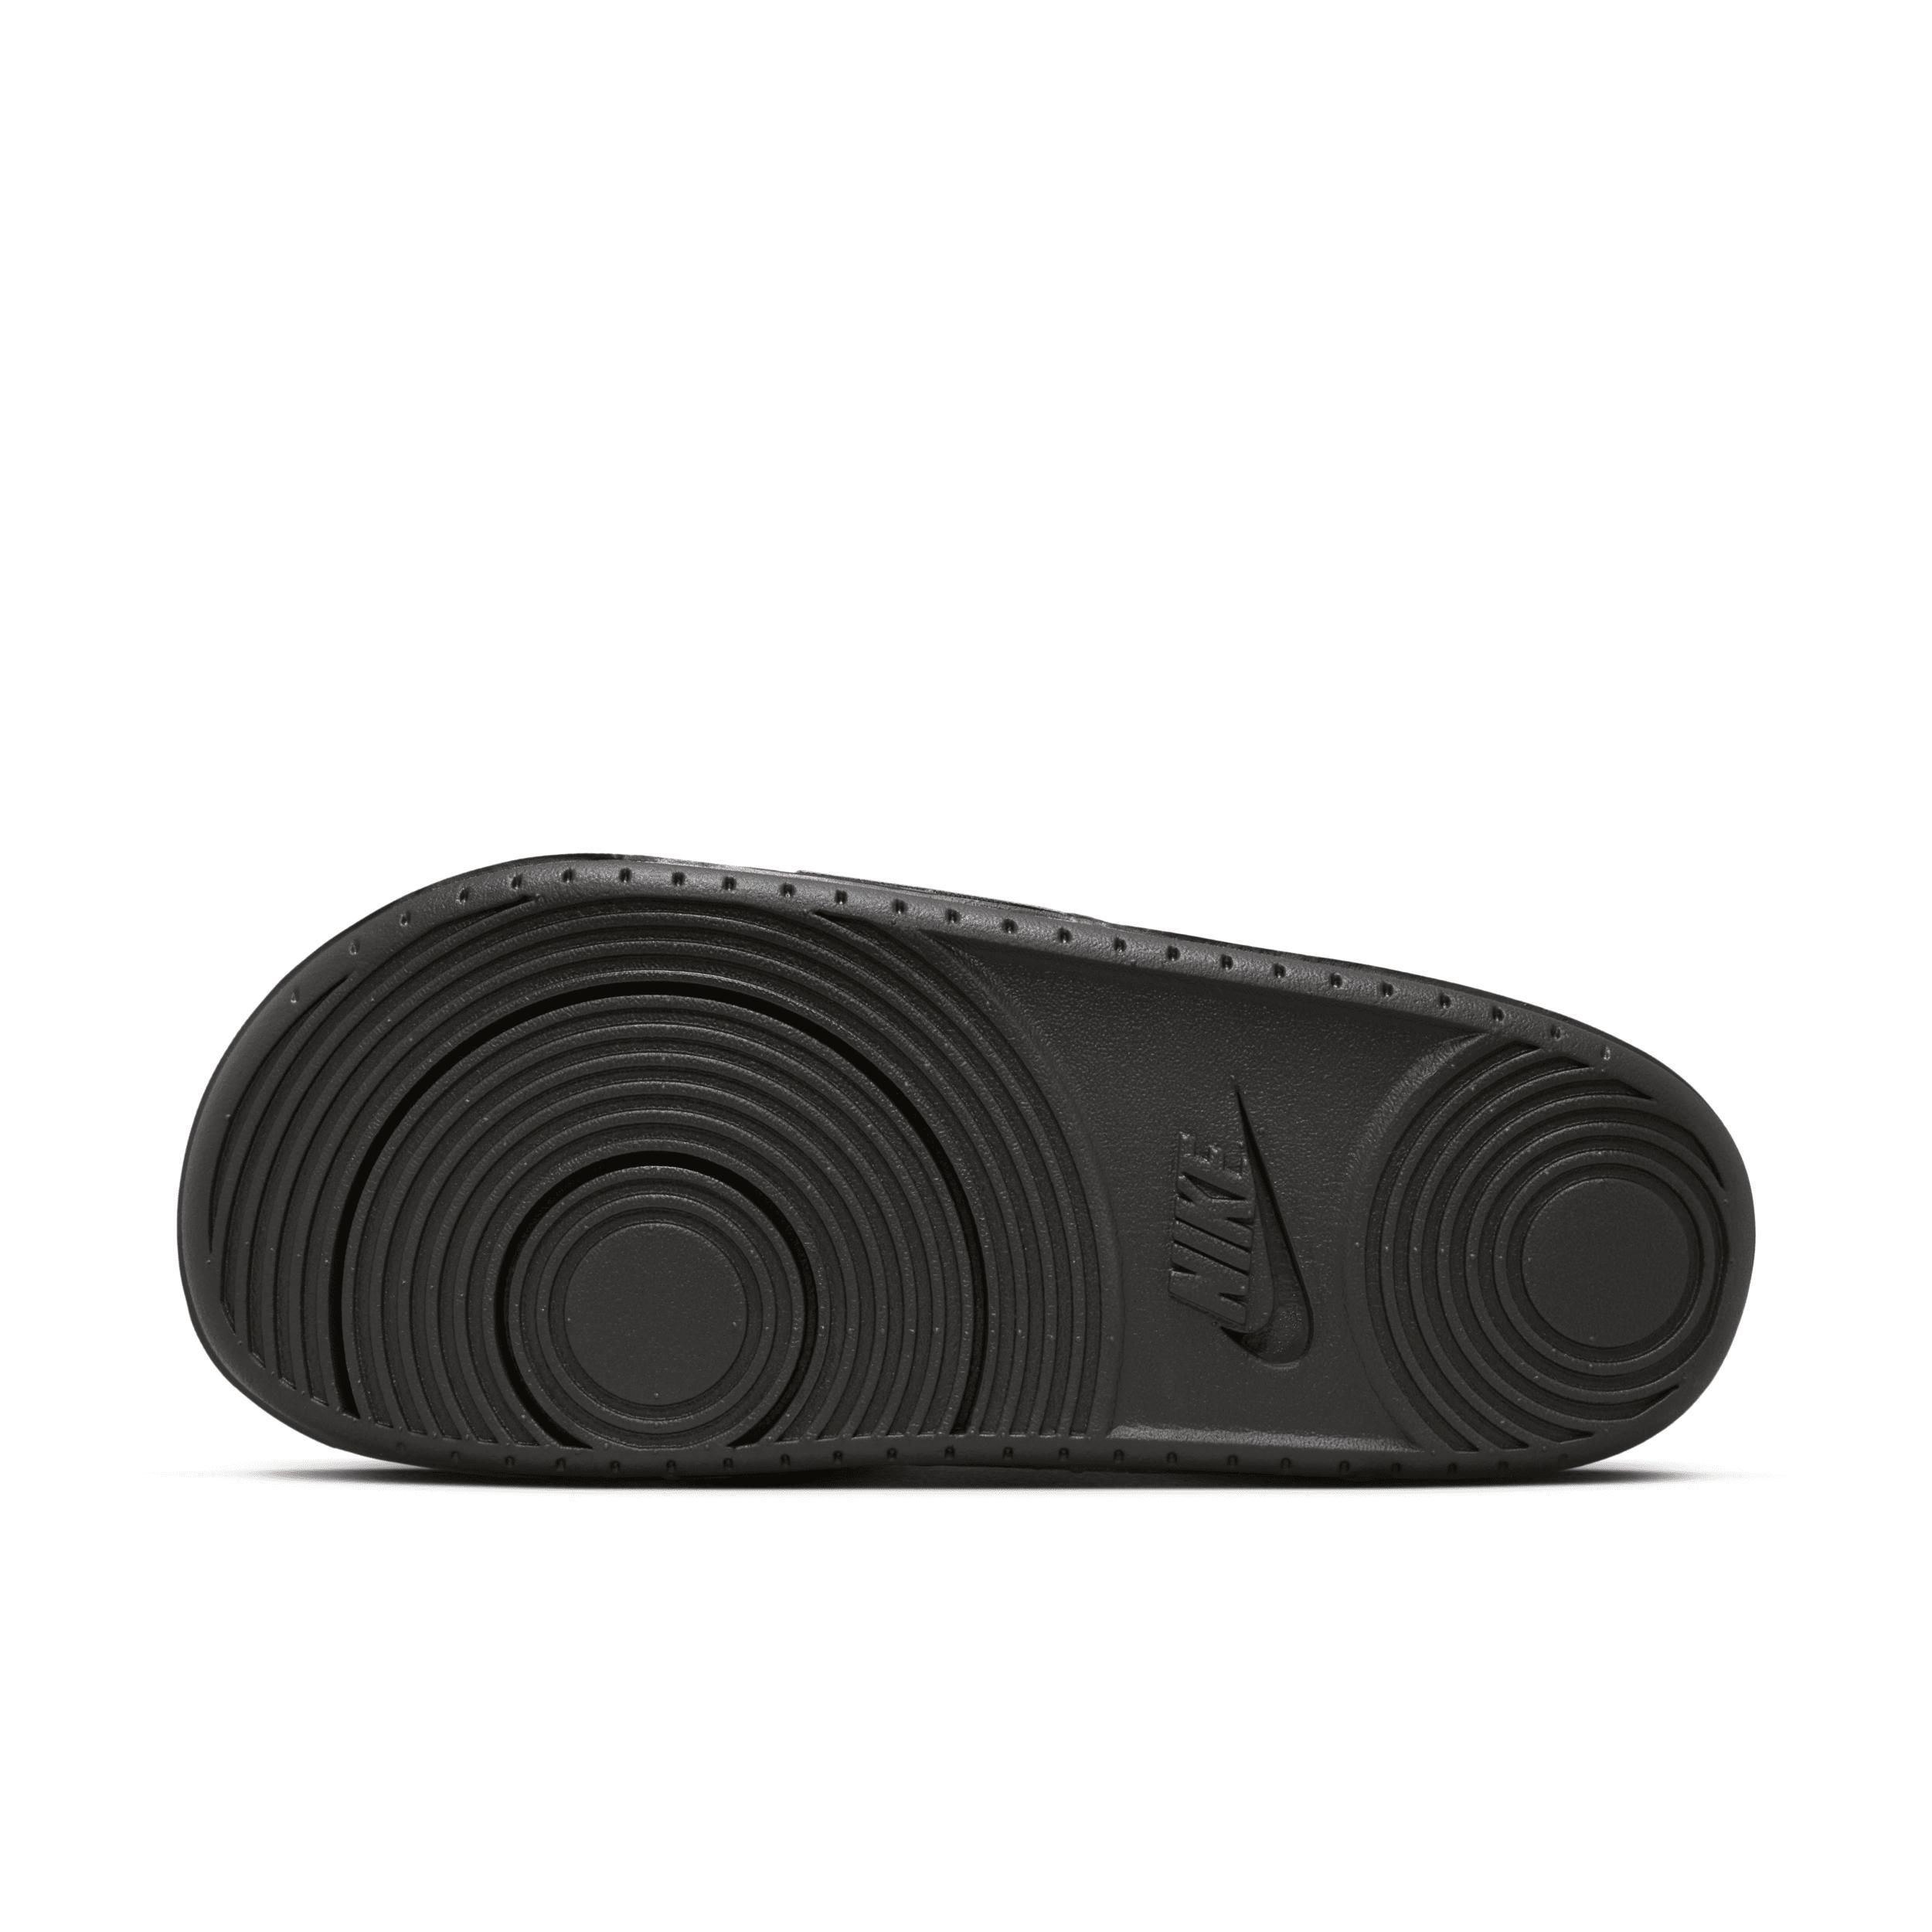 Nike Cincinnati Reds 2024 Off-Court Slide Sandals Product Image